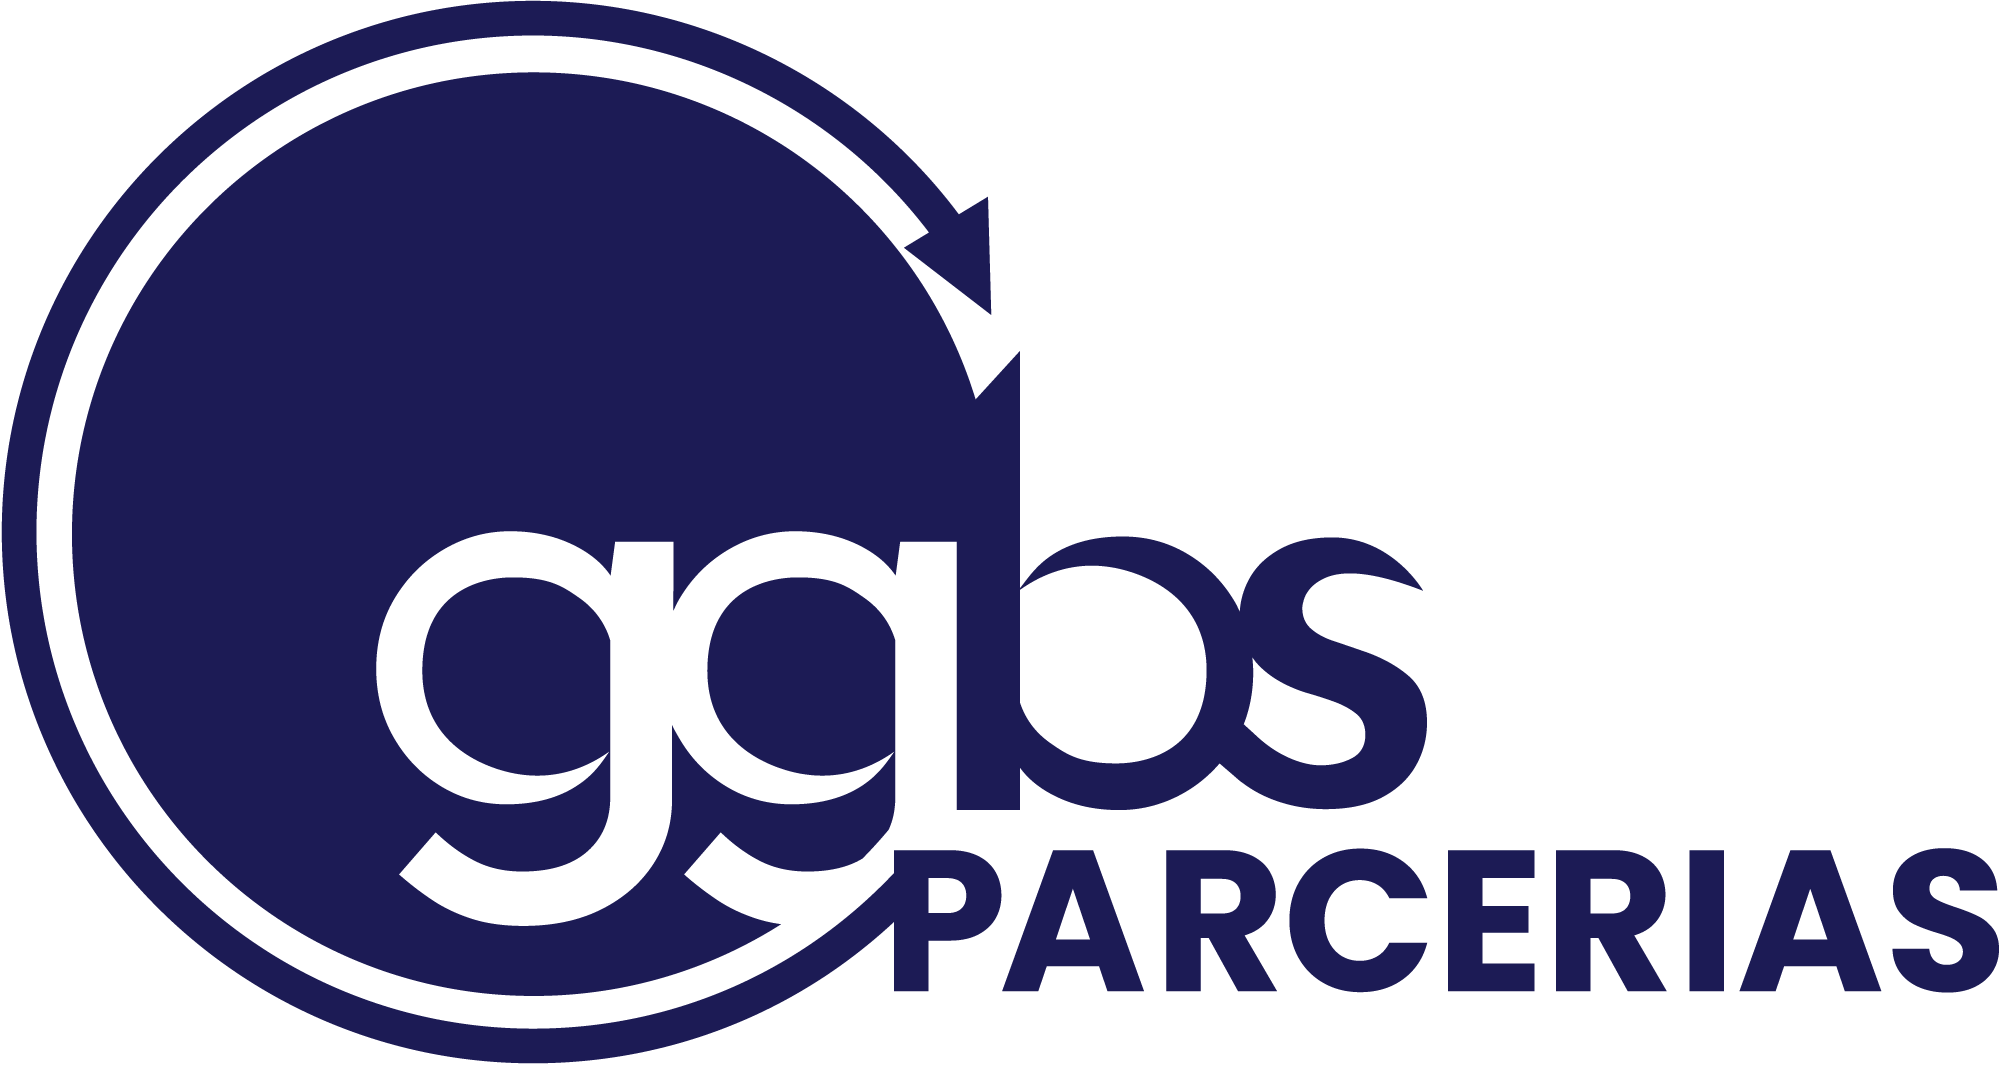 GGBS Parcerias